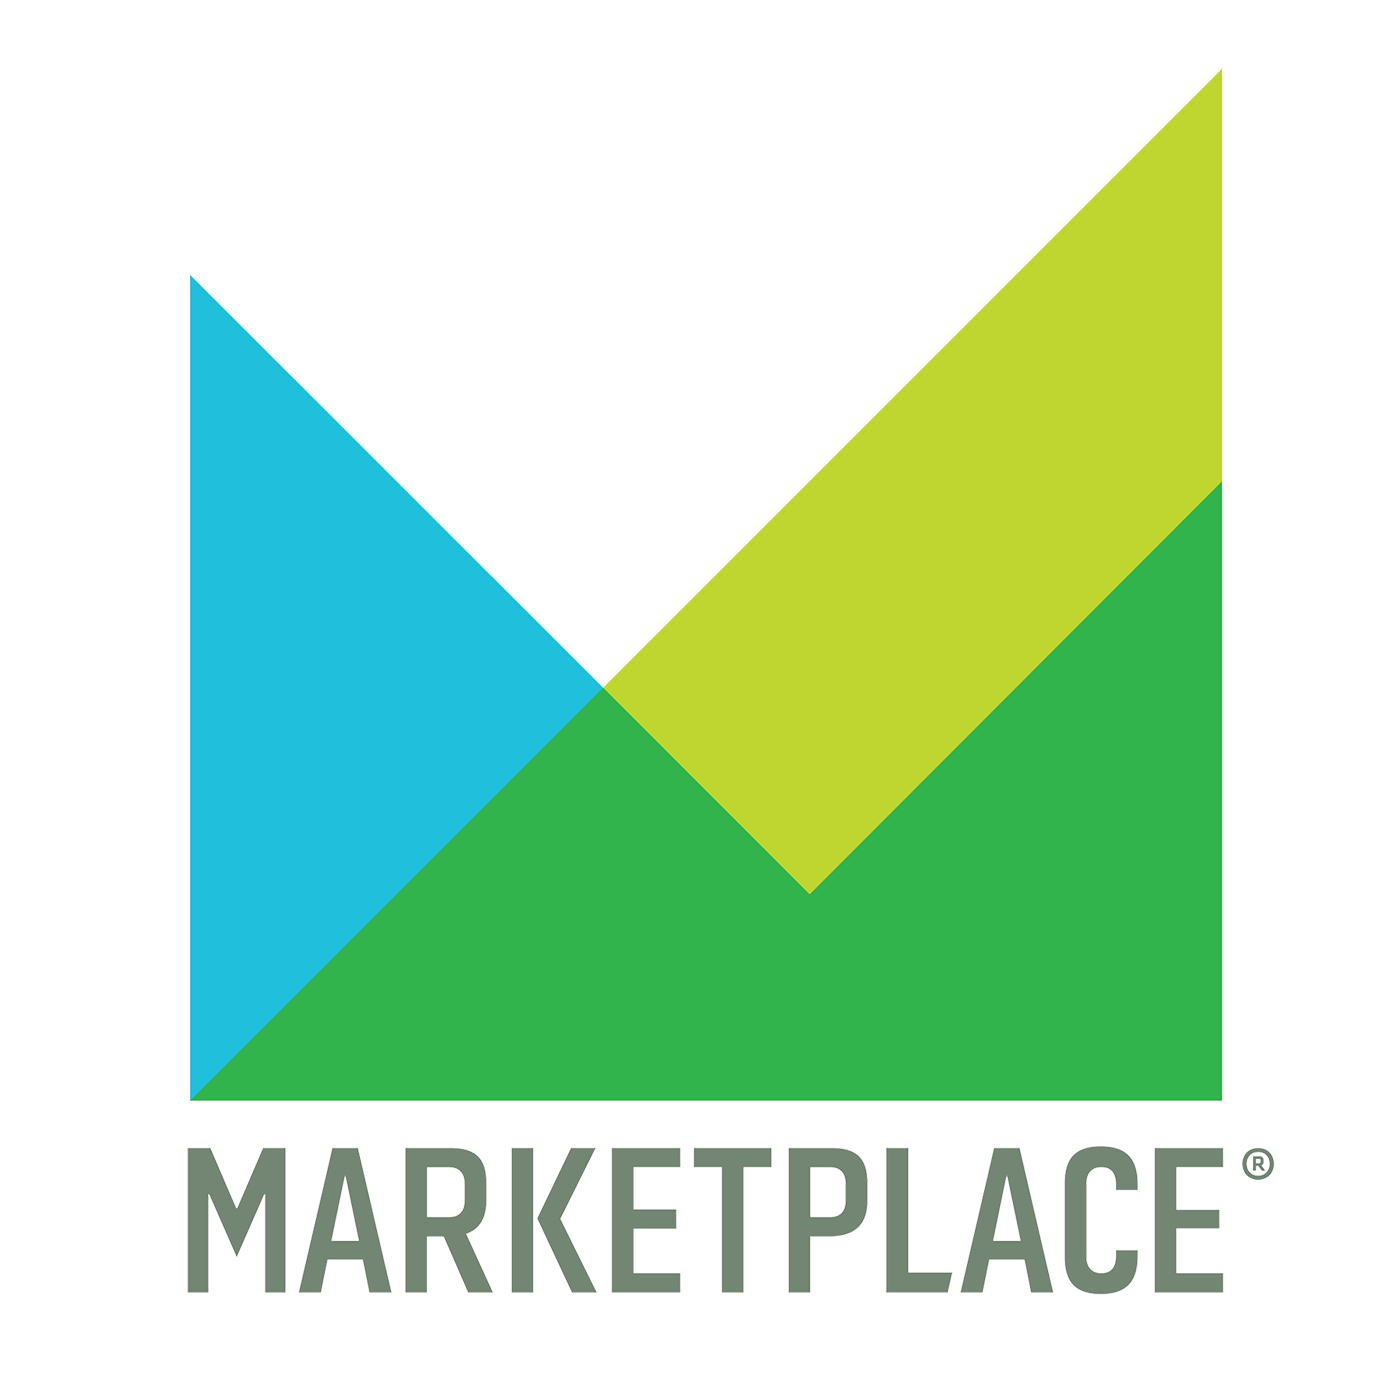 Gretchen Blough Talks Tariffs on Marketplace Podcast